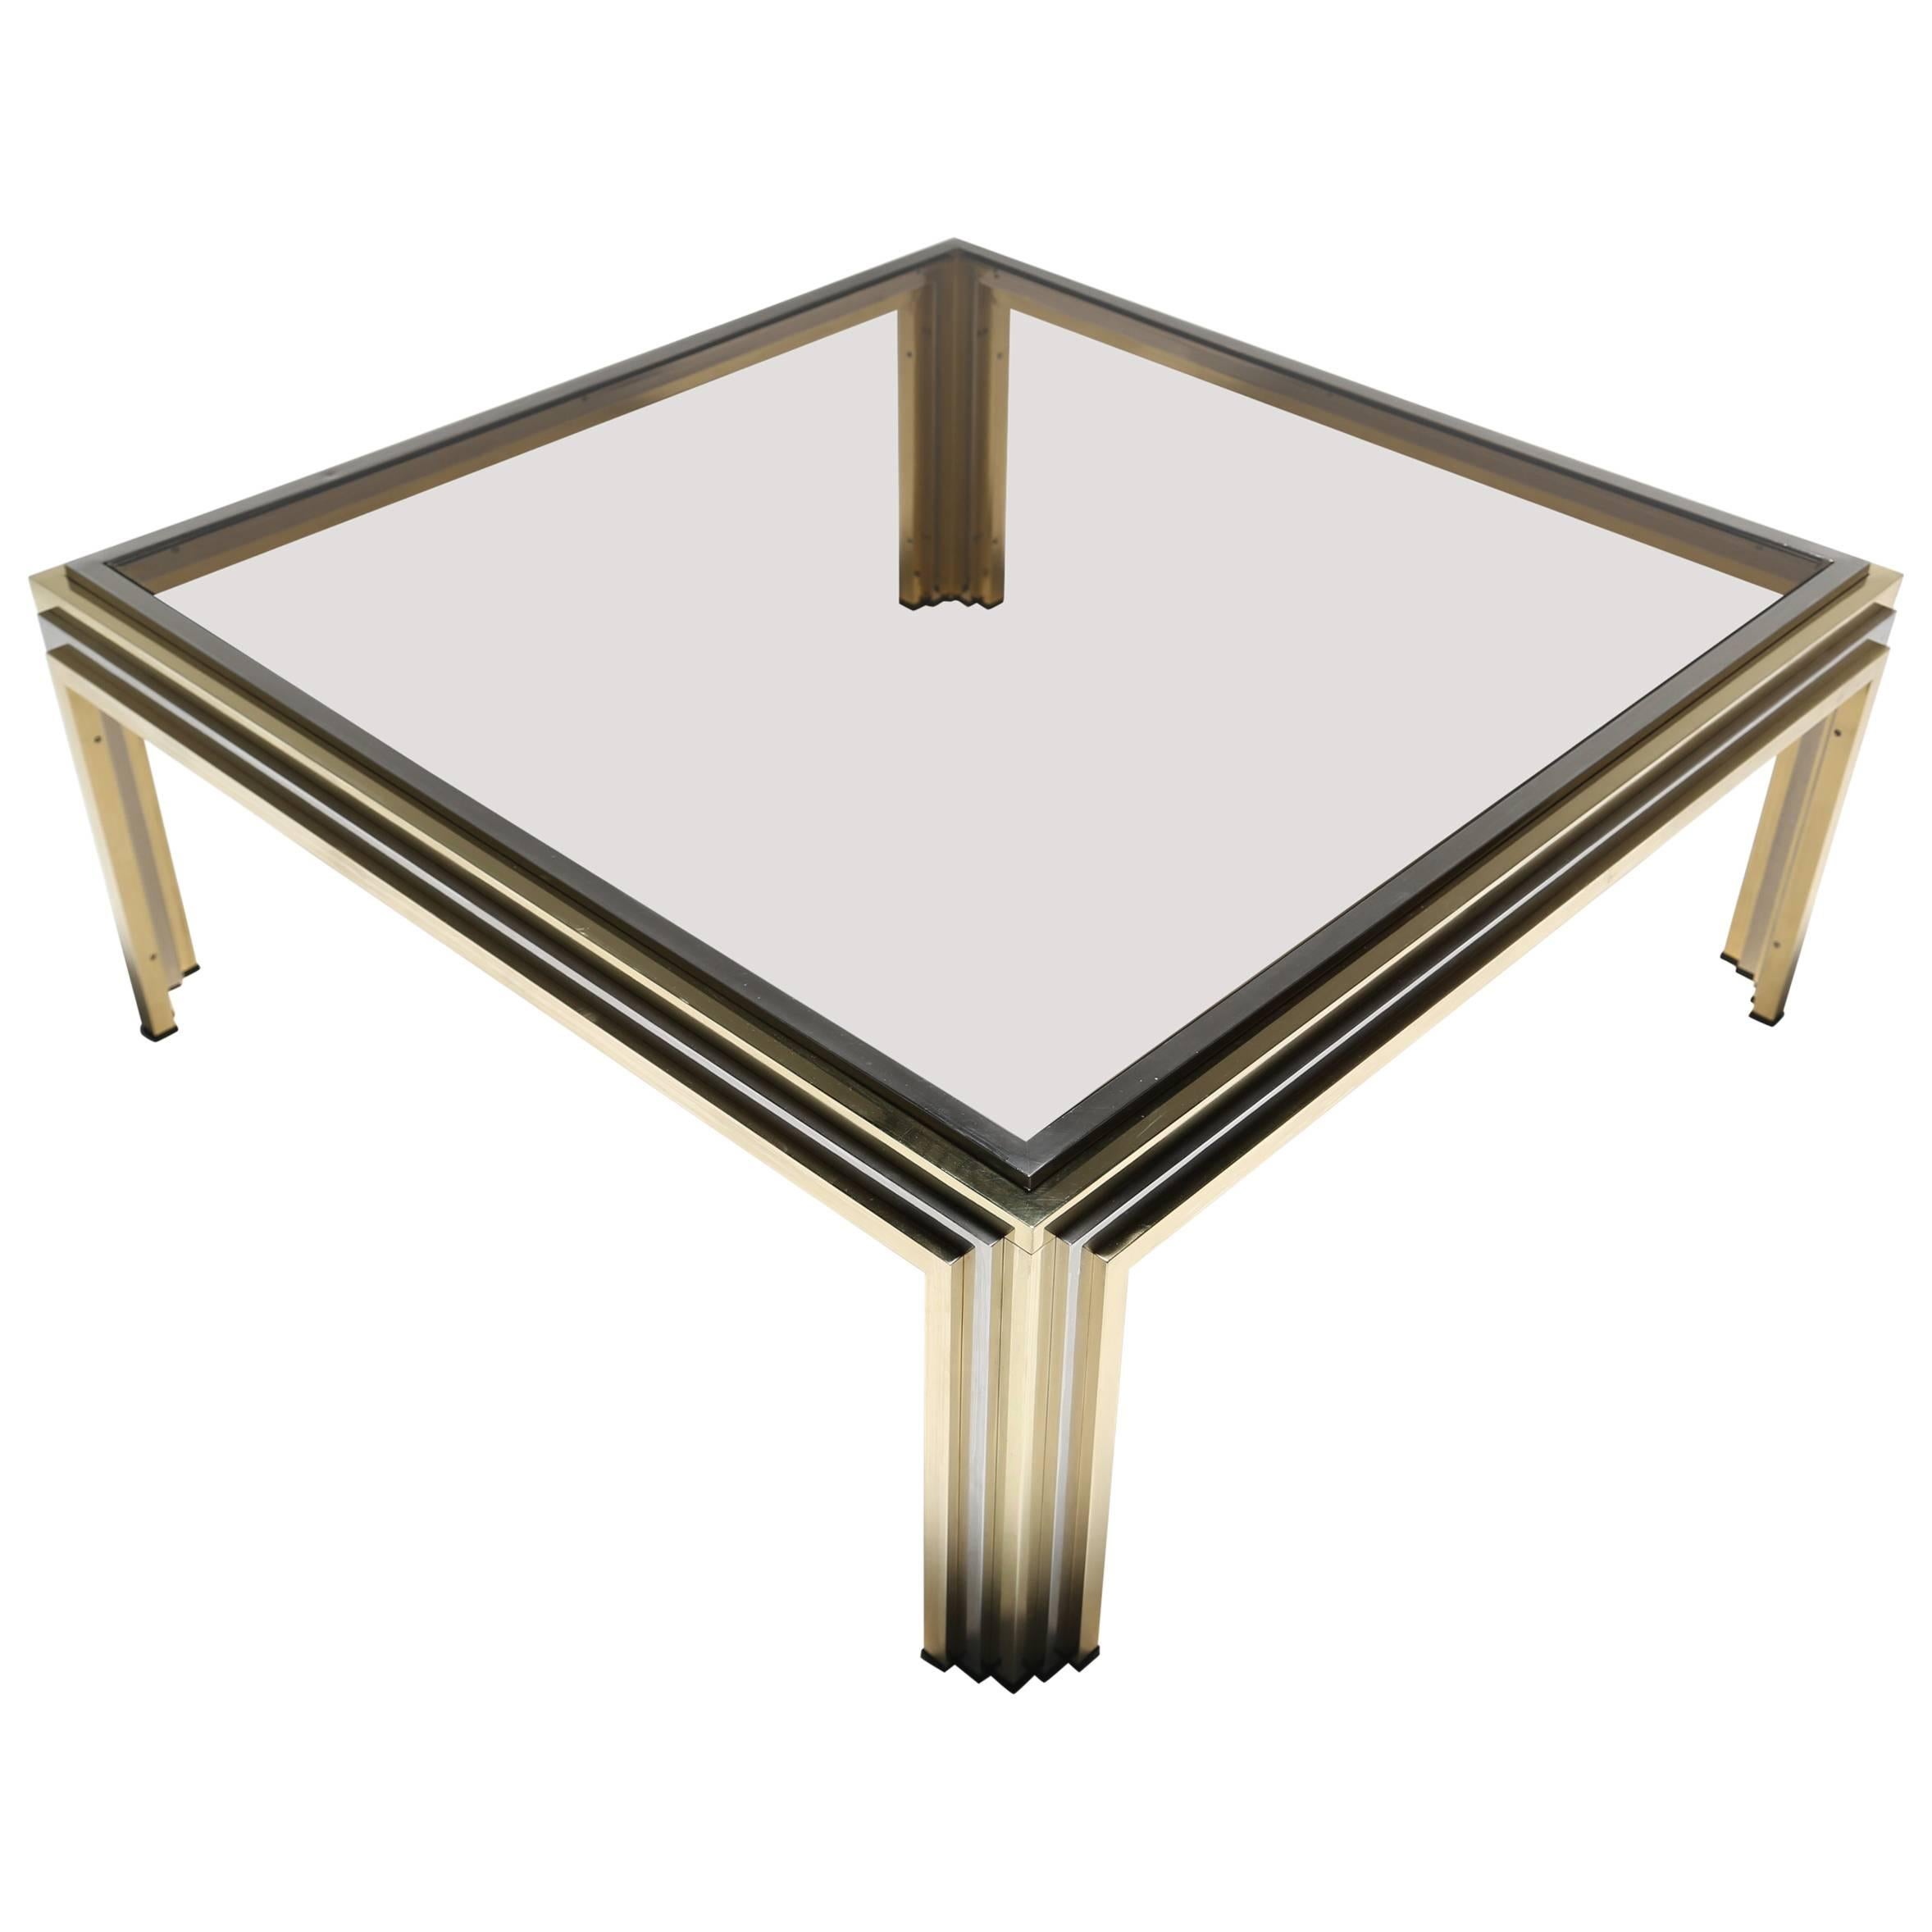 Romeo Rega brass and chrome mid-century coffee table.